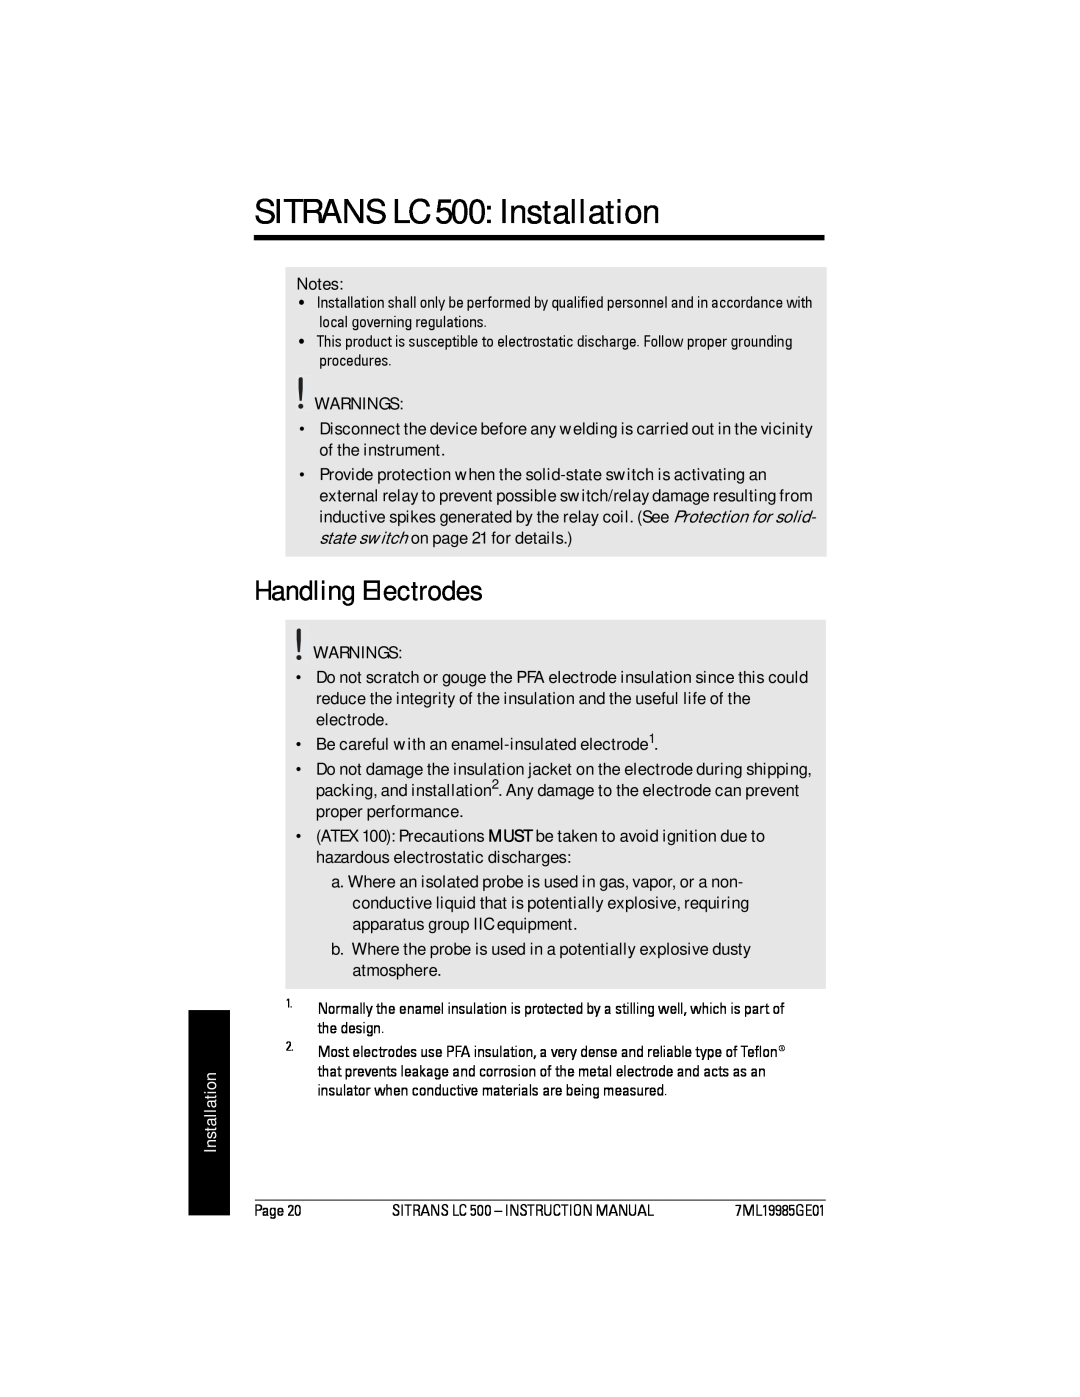 Siemens Sitrans instruction manual SITRANS LC 500 Installation, Handling Electrodes 